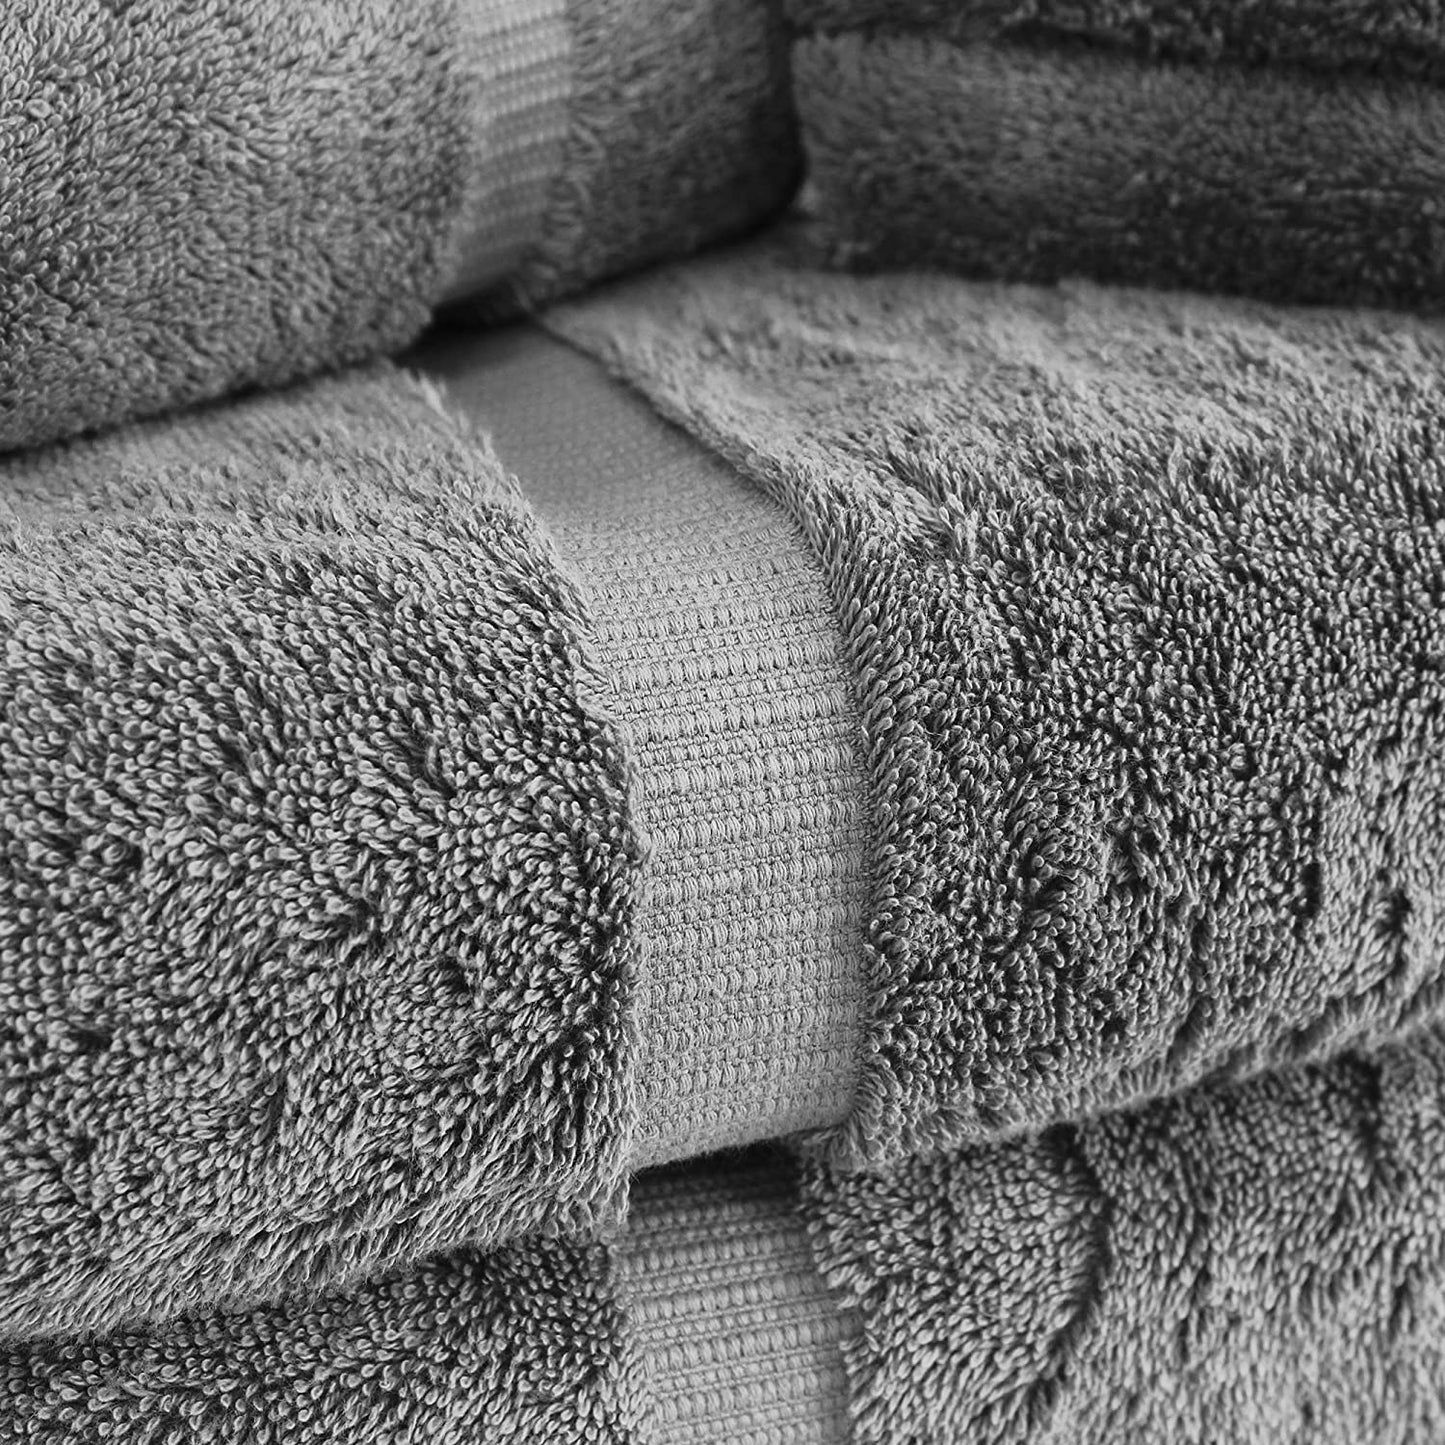 Premium Turkish Cotton Super Soft and Absorbent Towels (8-Piece Towel Set, Gray)